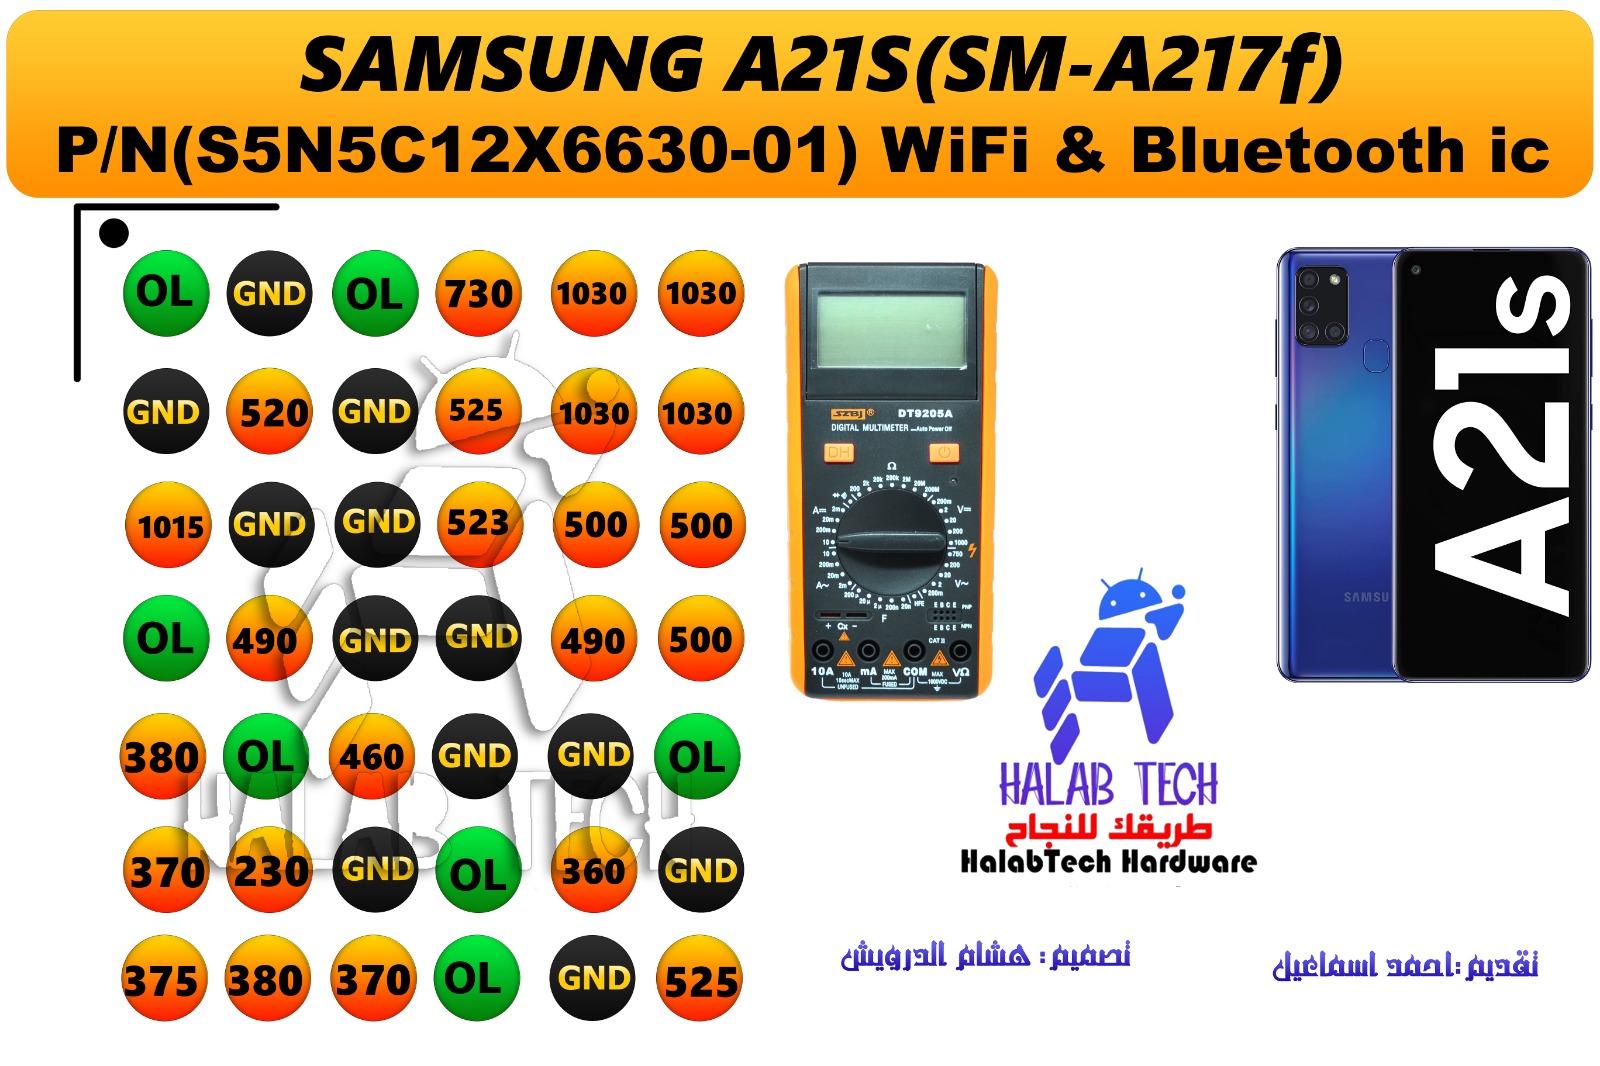 SamsungA21SA217FP-NS5N5C12X6630-01WIfi-bluetoothICdiodevalues.png.705f95d6833197374a8ce27753356087.png